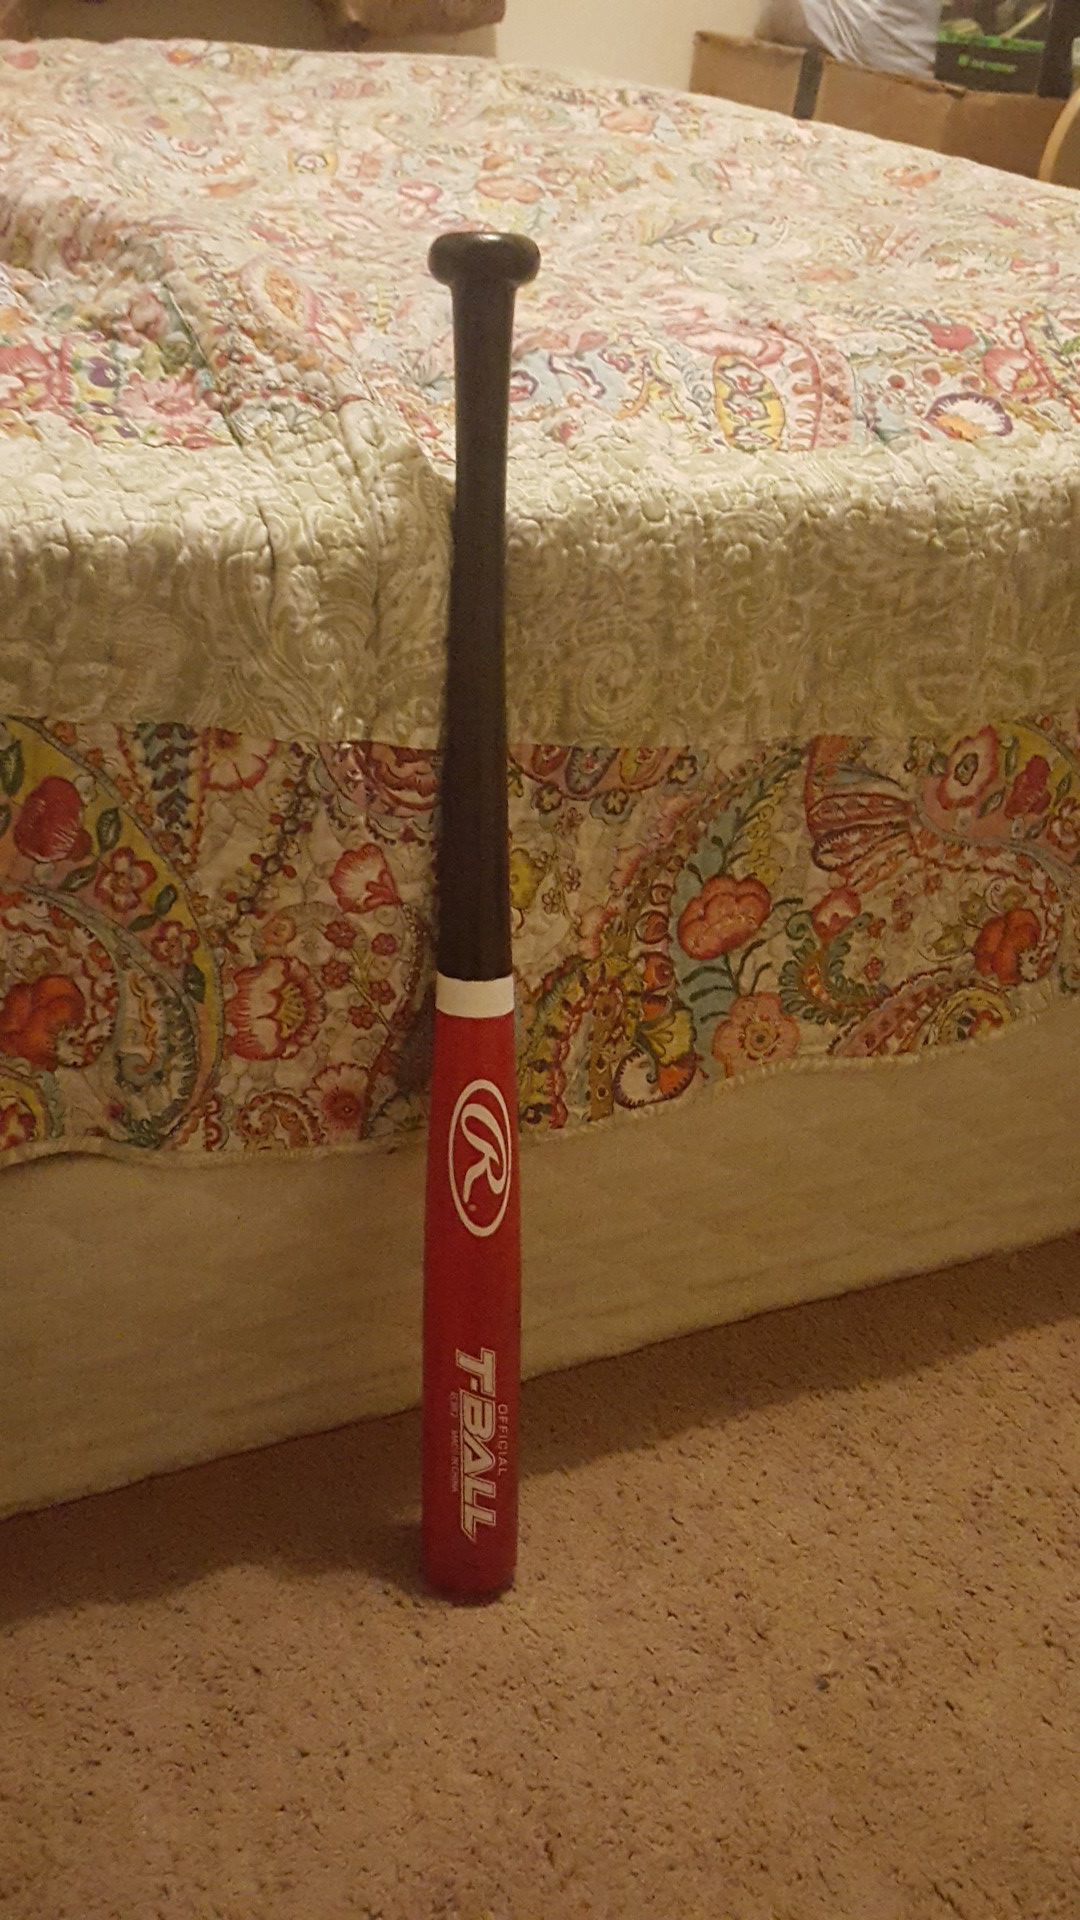 T-ball baseball bat